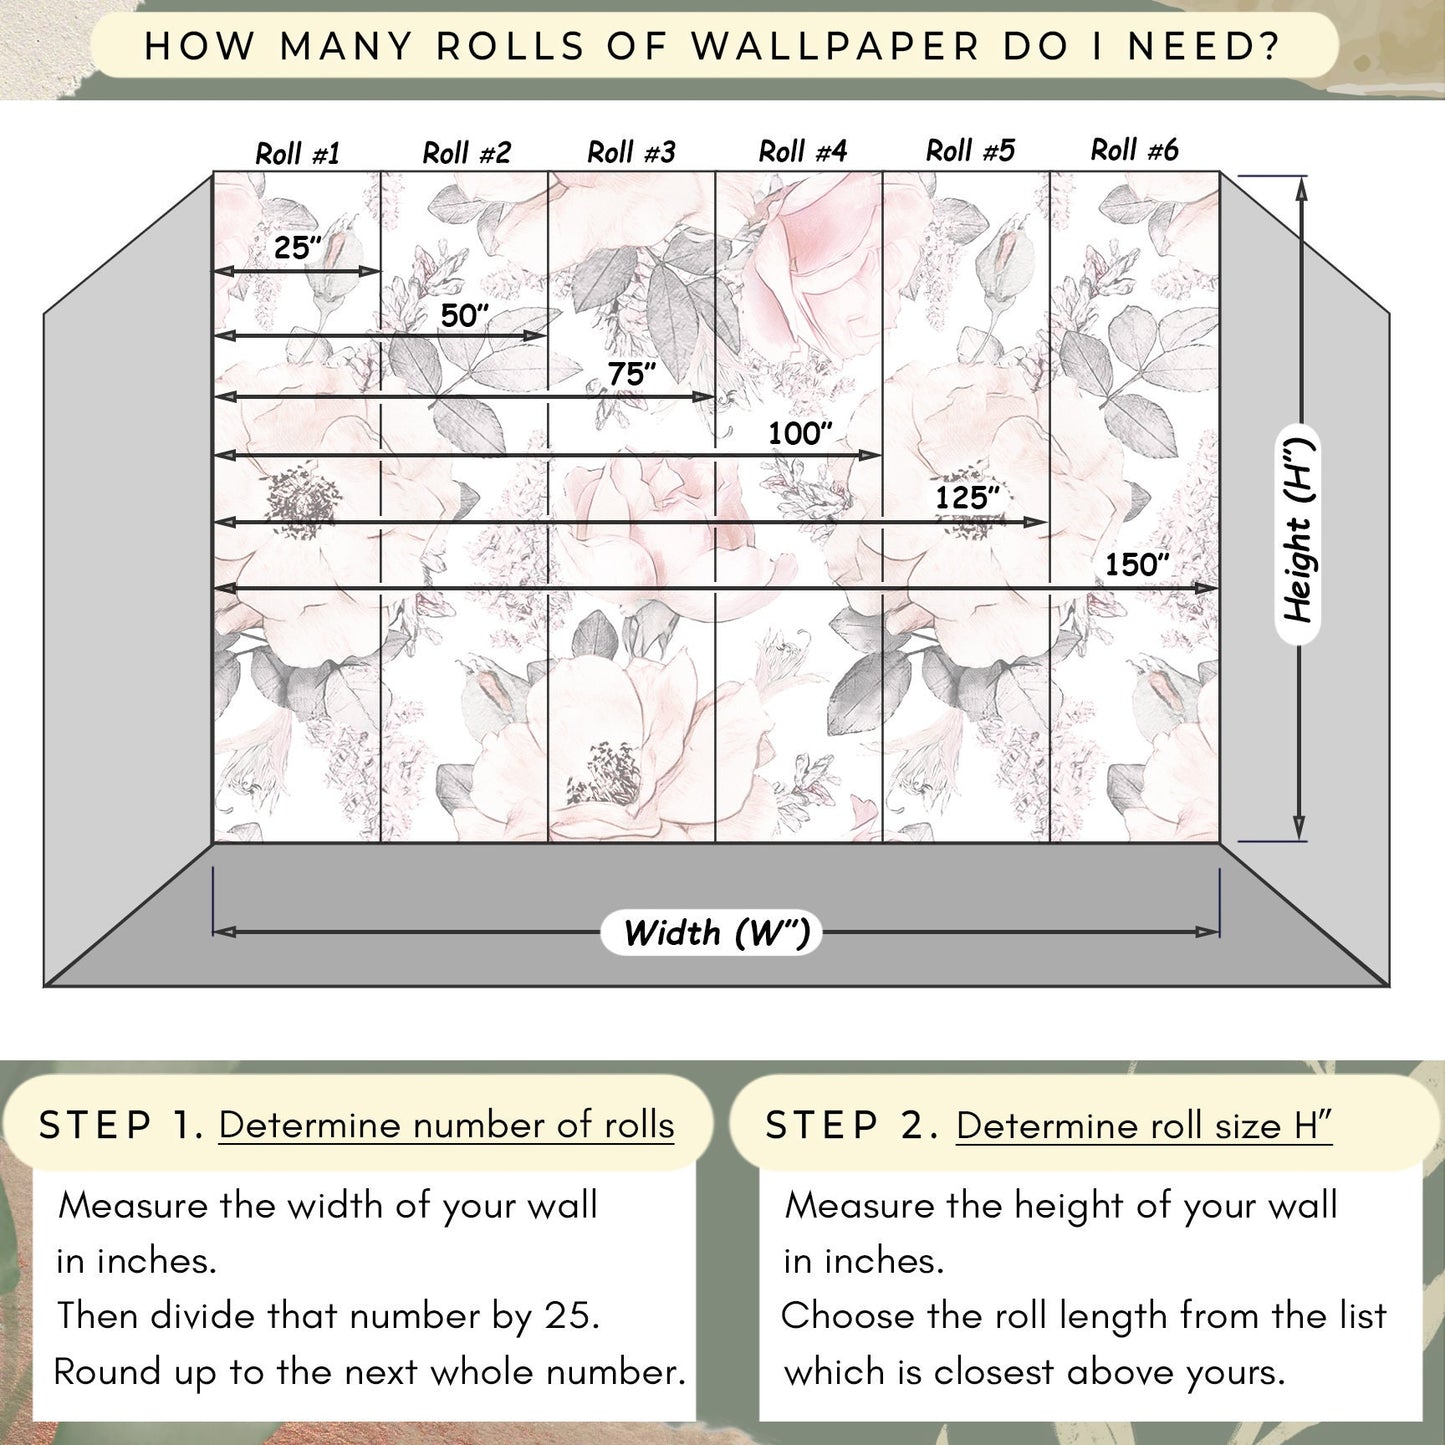 Elephant Wallpaper, Giraffe Wallpaper, Black and White Wallpaper Peel and Stick, Animal Wallpaper, Removable Wall Paper